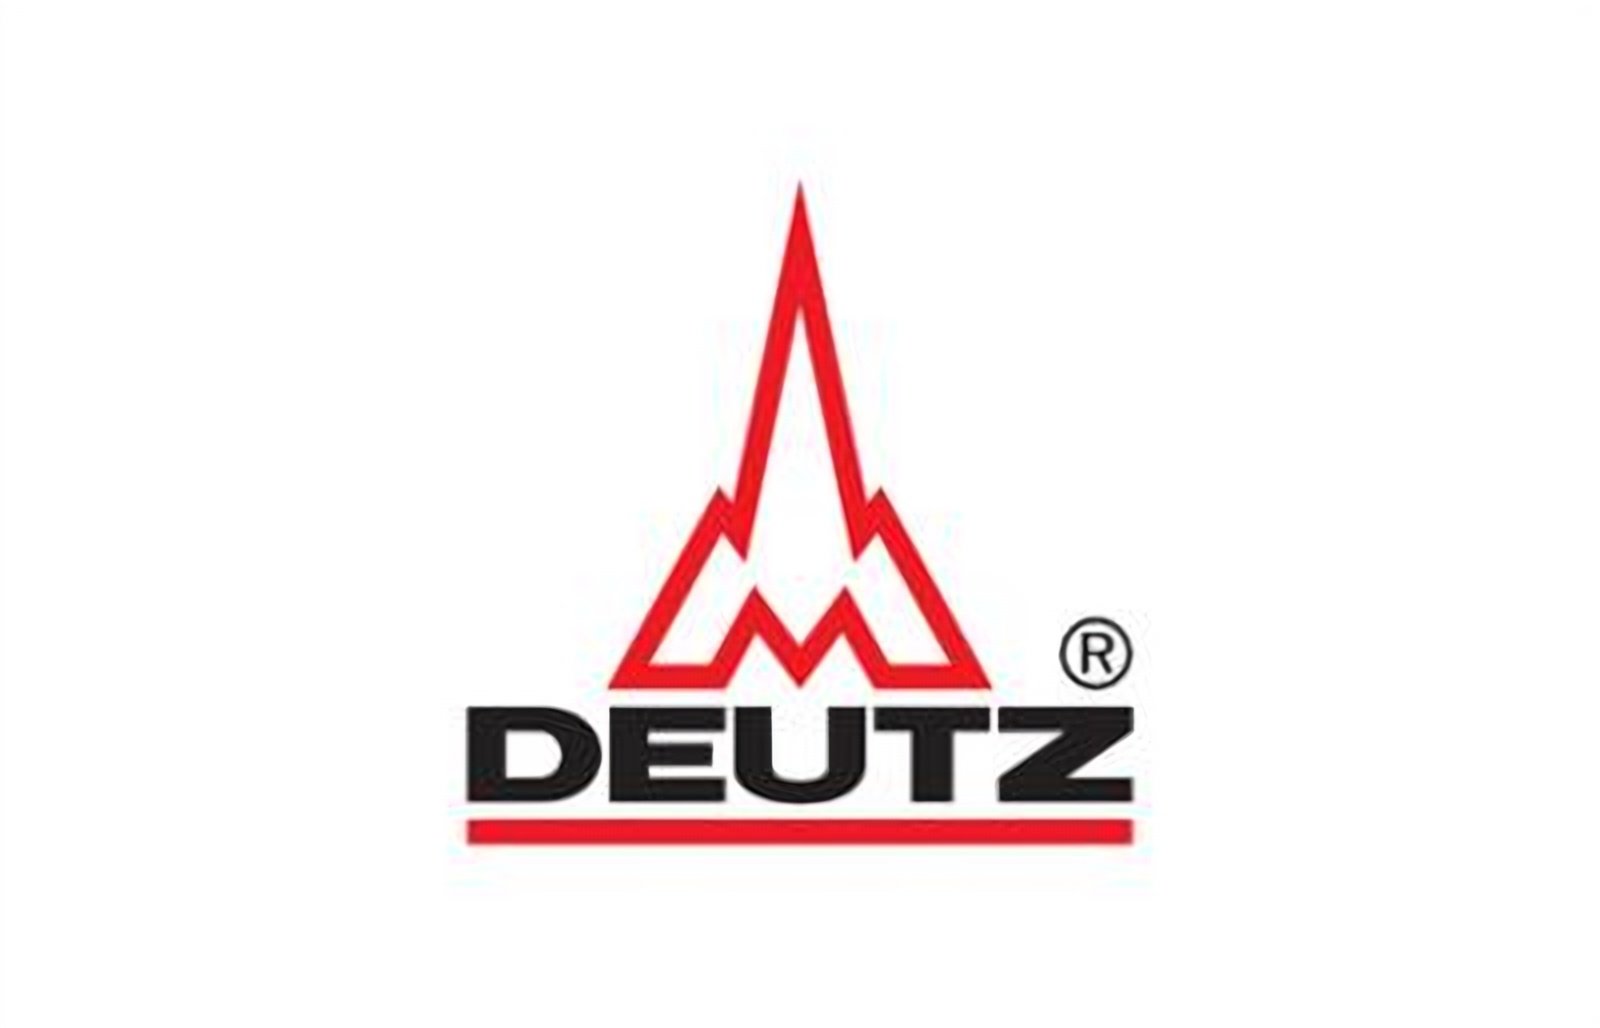 logo della collezione batterie magirus-deutz di puntobatterie